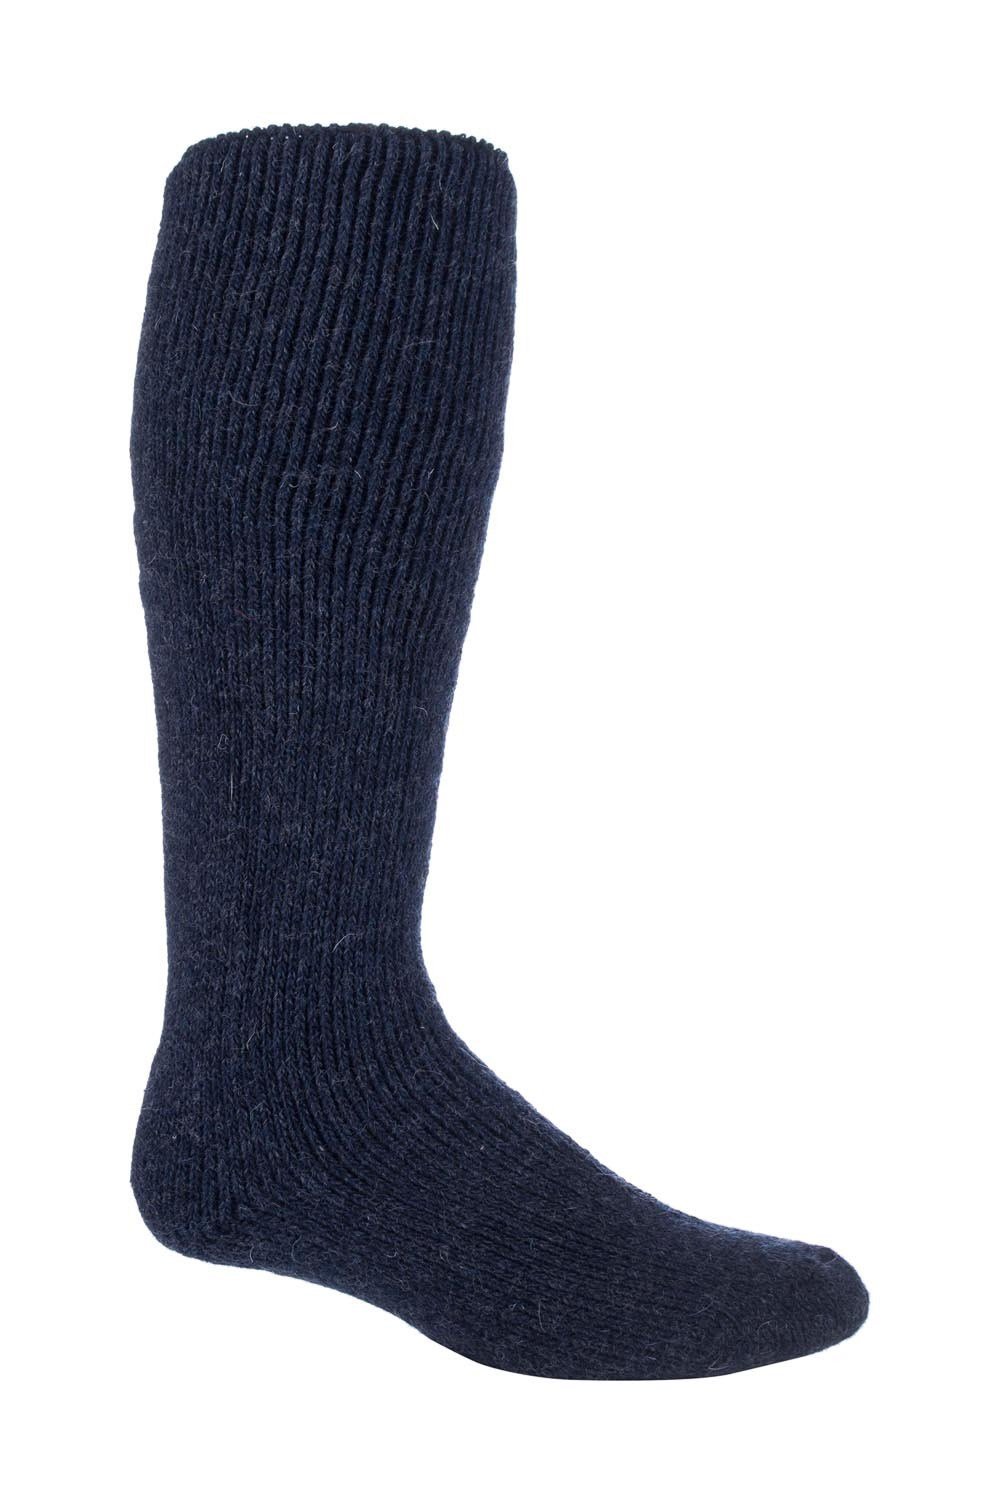 Mens Extra Long Thermal Wool Socks -